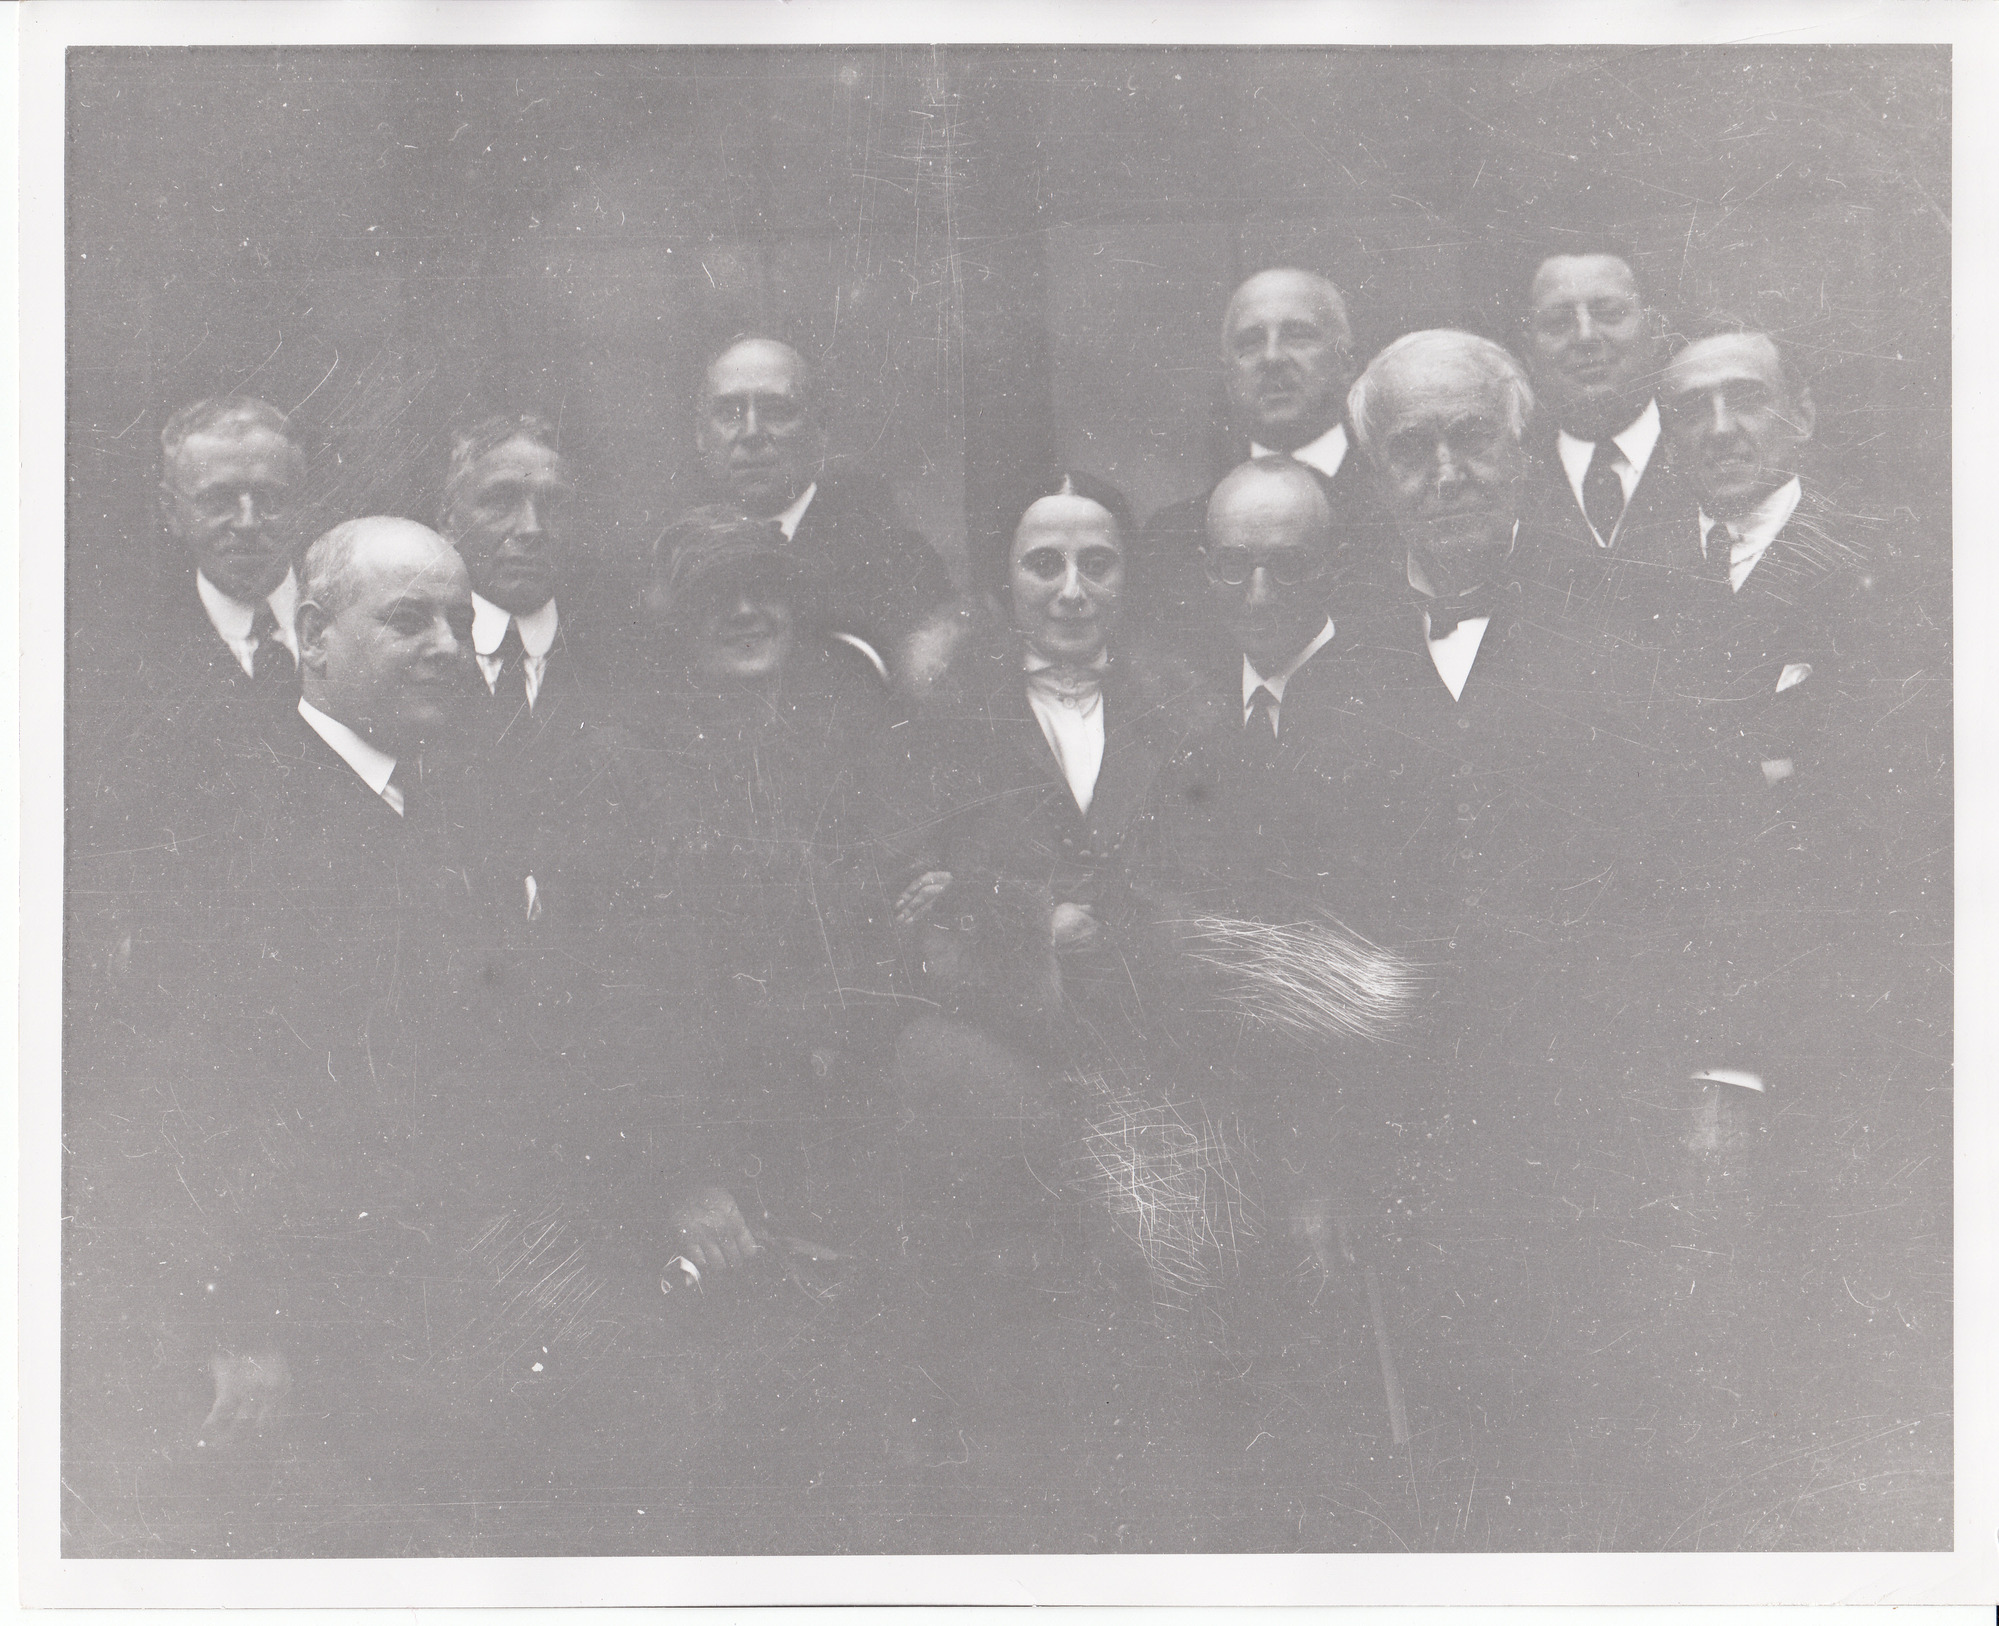 Anna Pavlova visiting Thomas Edison at his West Orange Laboratory.